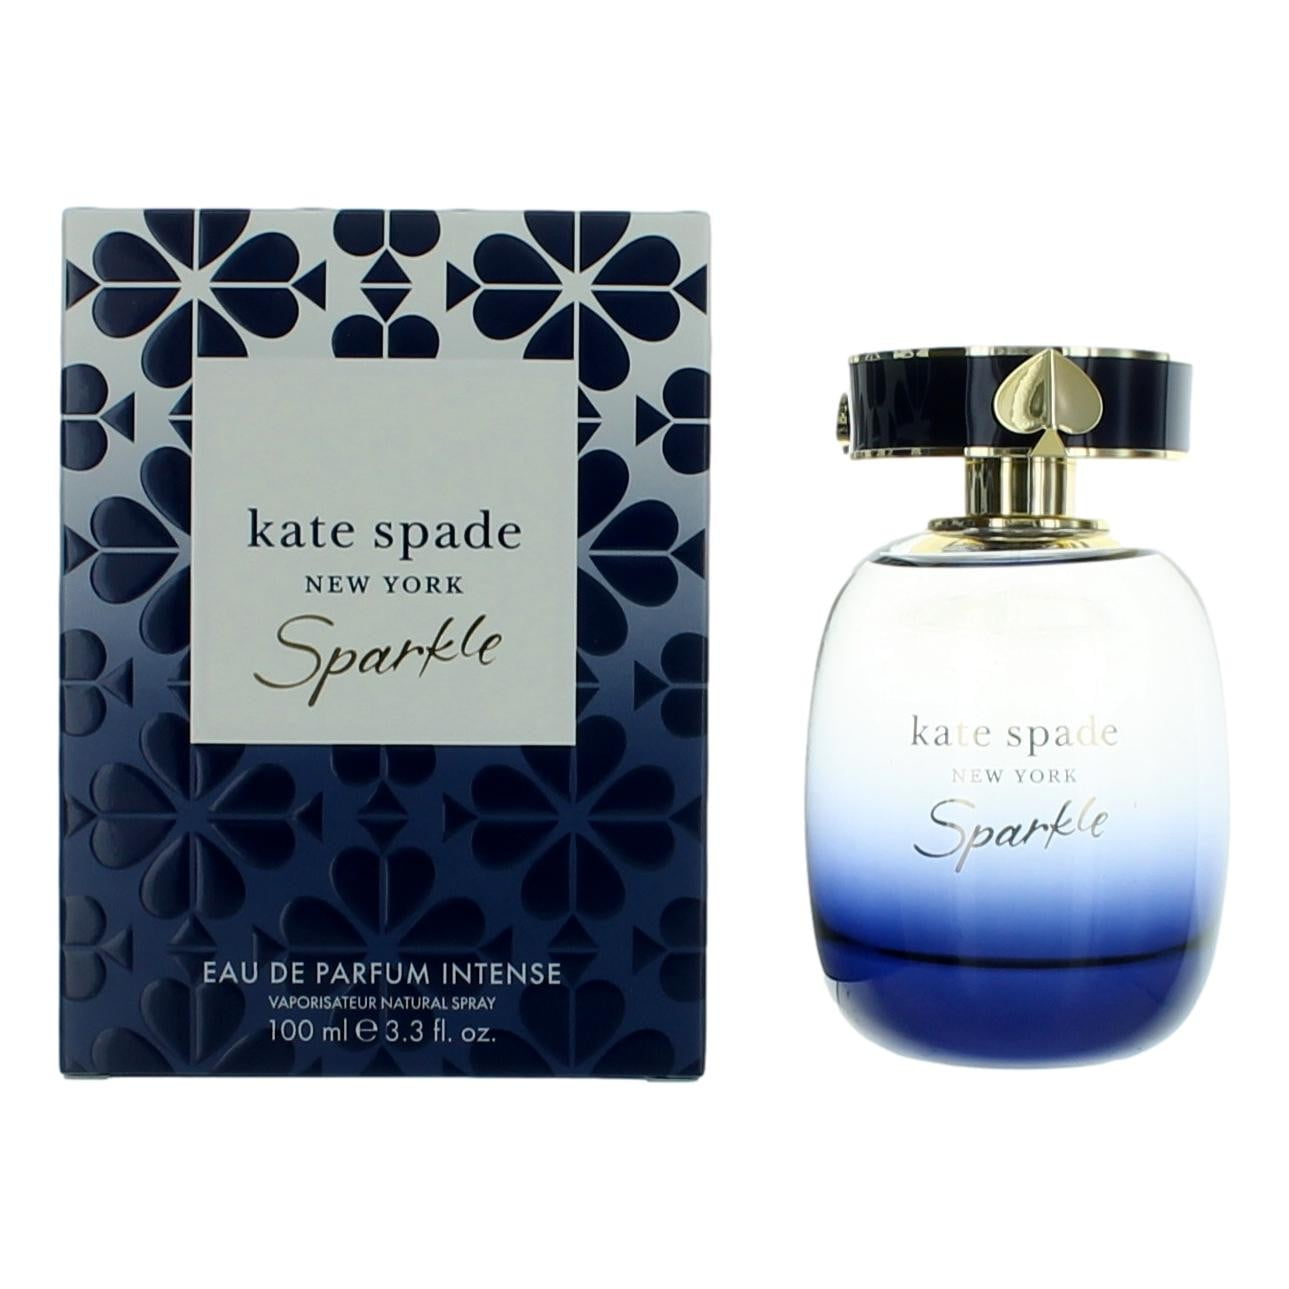 Kate Spade New York Sparkle for Women Eau de Parfum Intense Spray